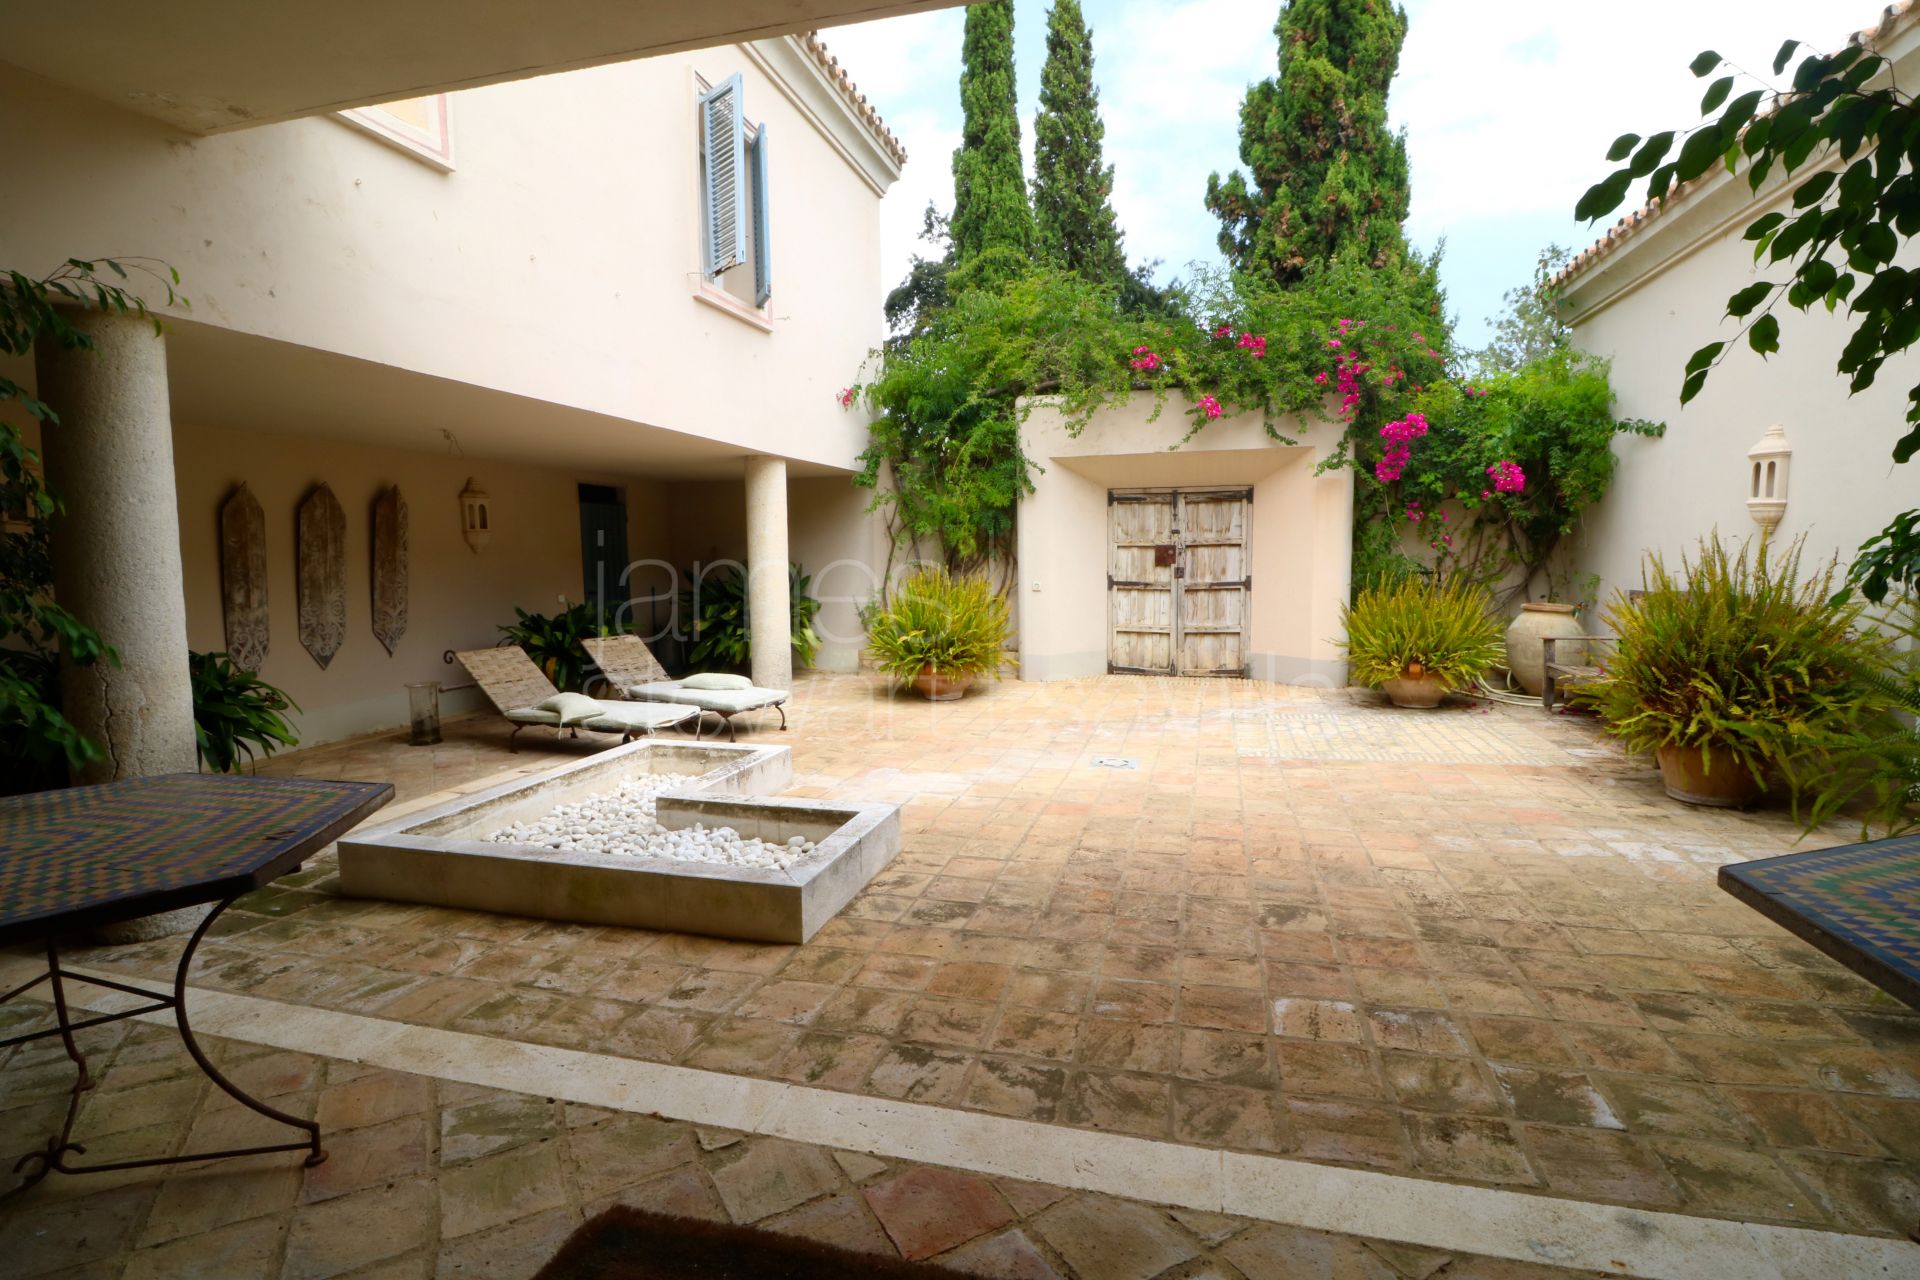 Lovely characterful villa in the gated Los Altos de Valderrama